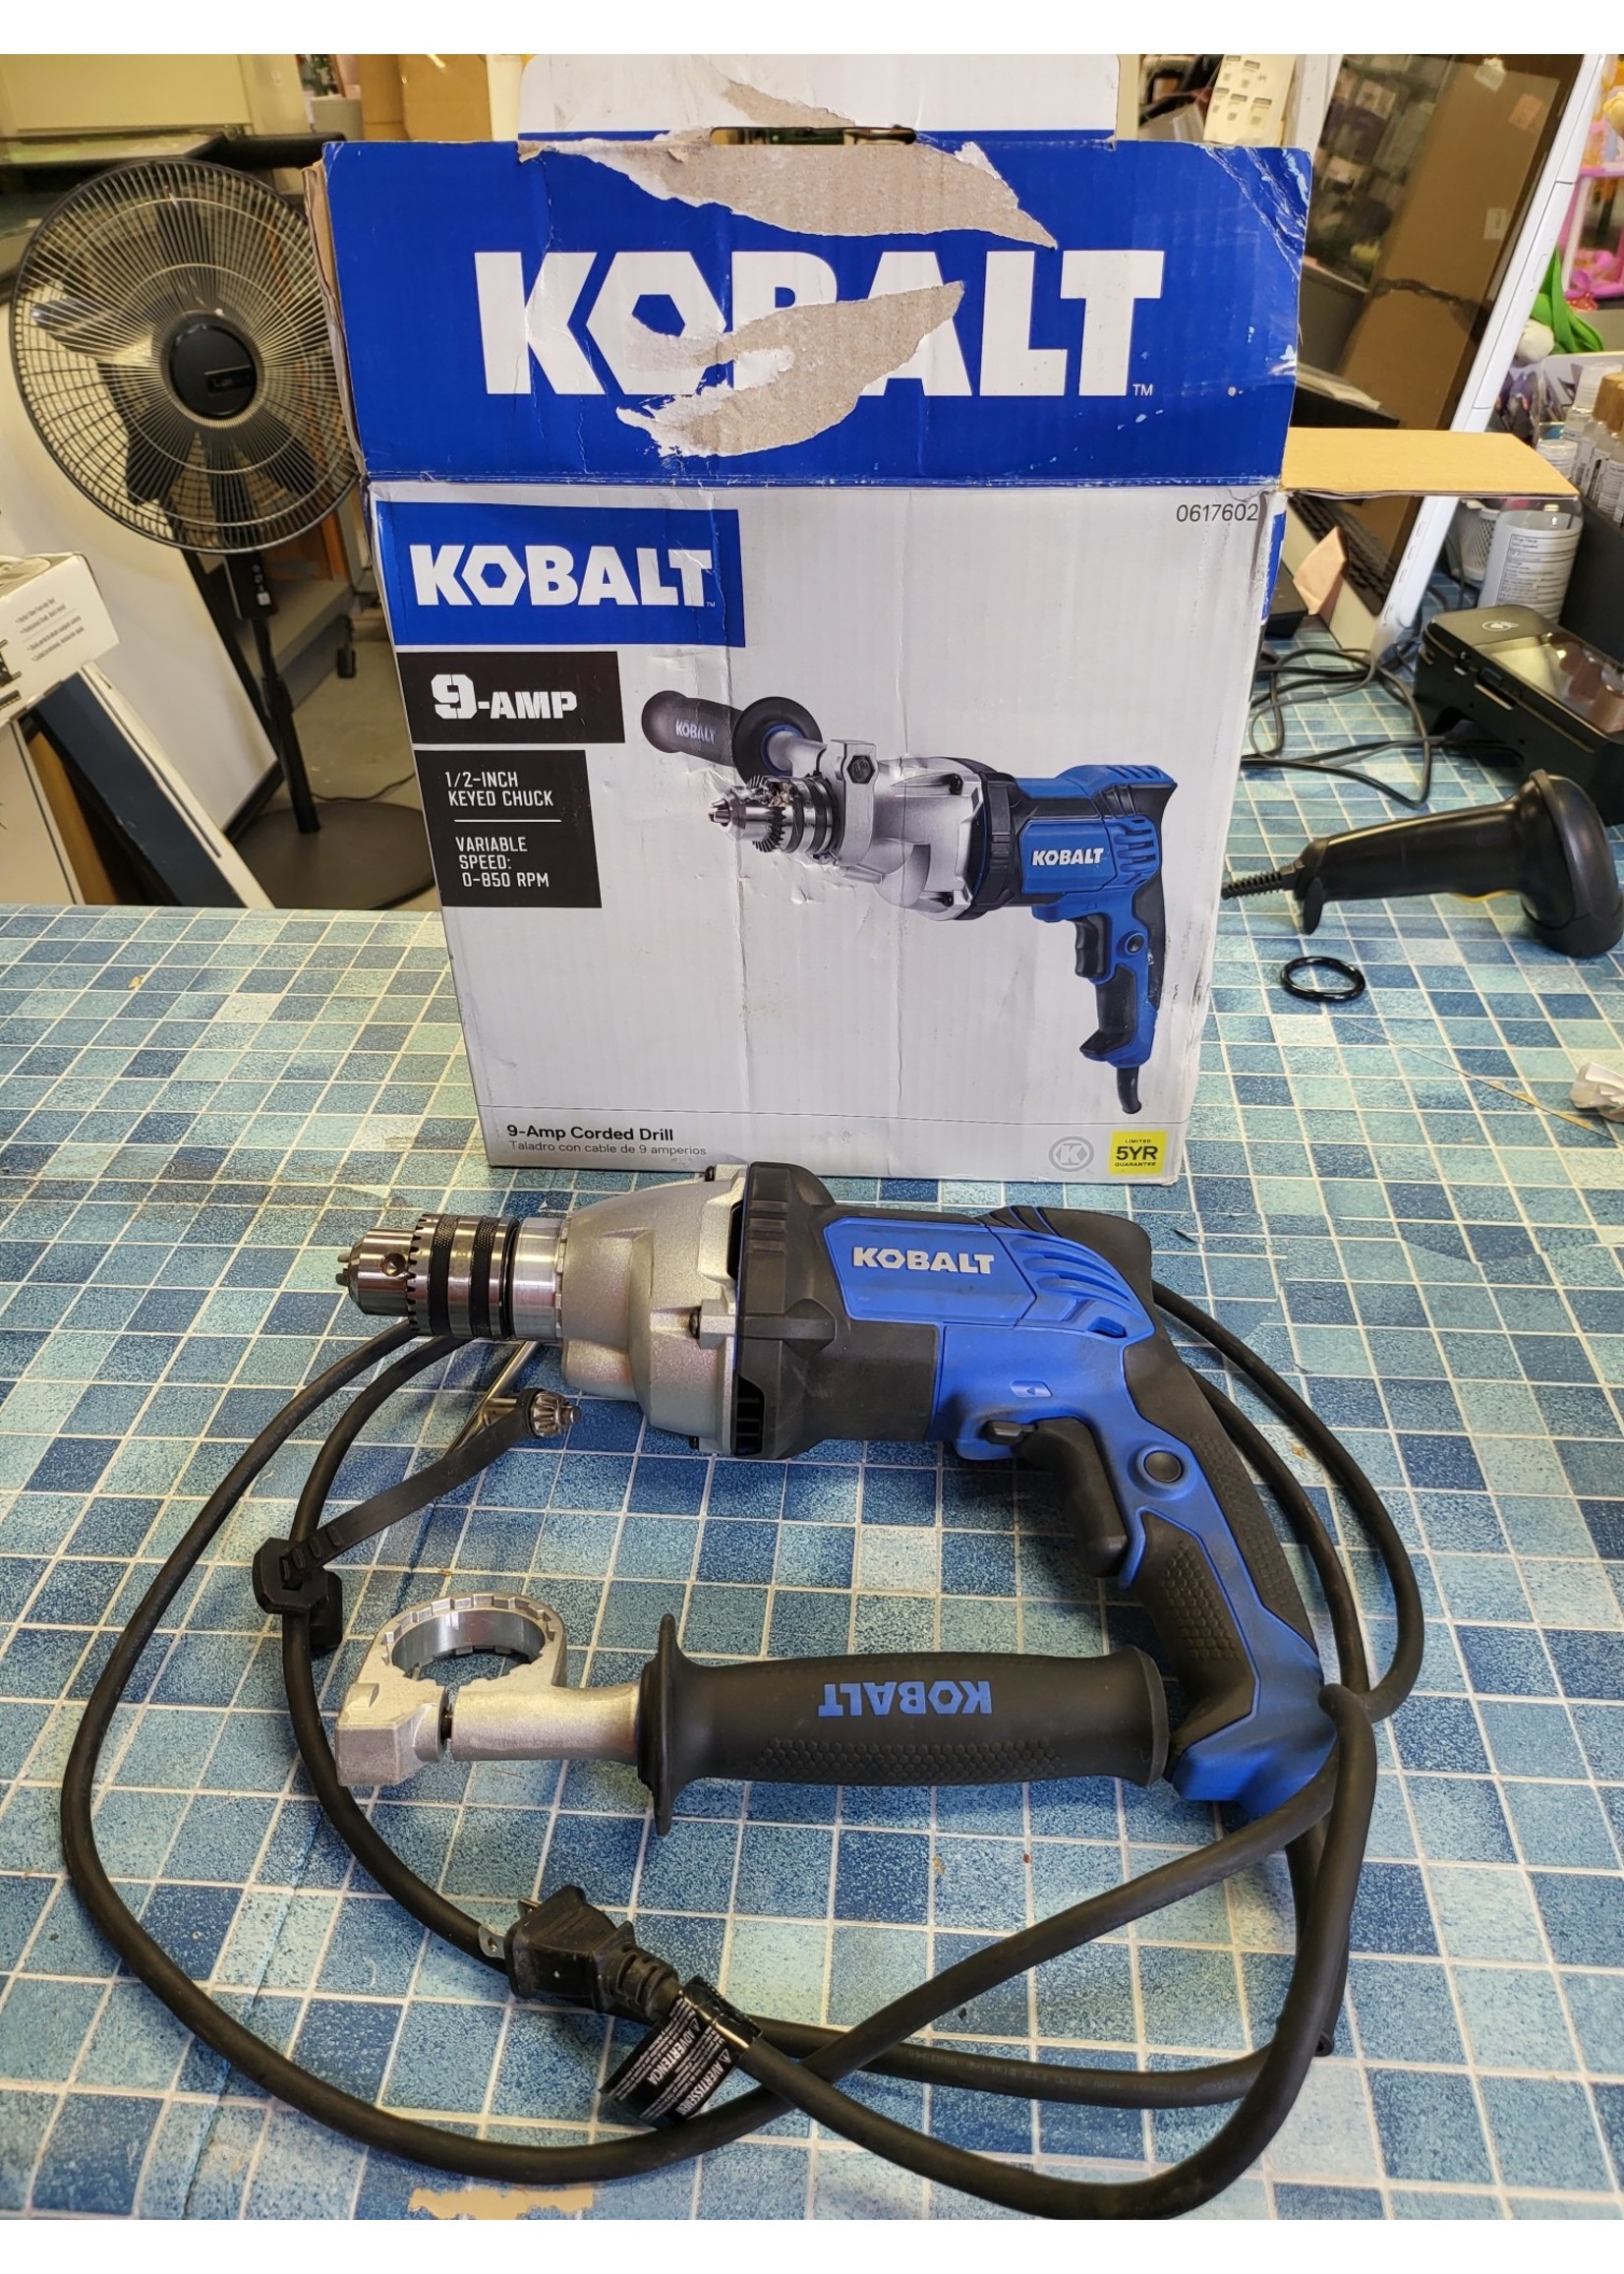 Kobalt - 1/2" Keyed Chuck (K09D-03) 9A Variable Speed Corded Drill